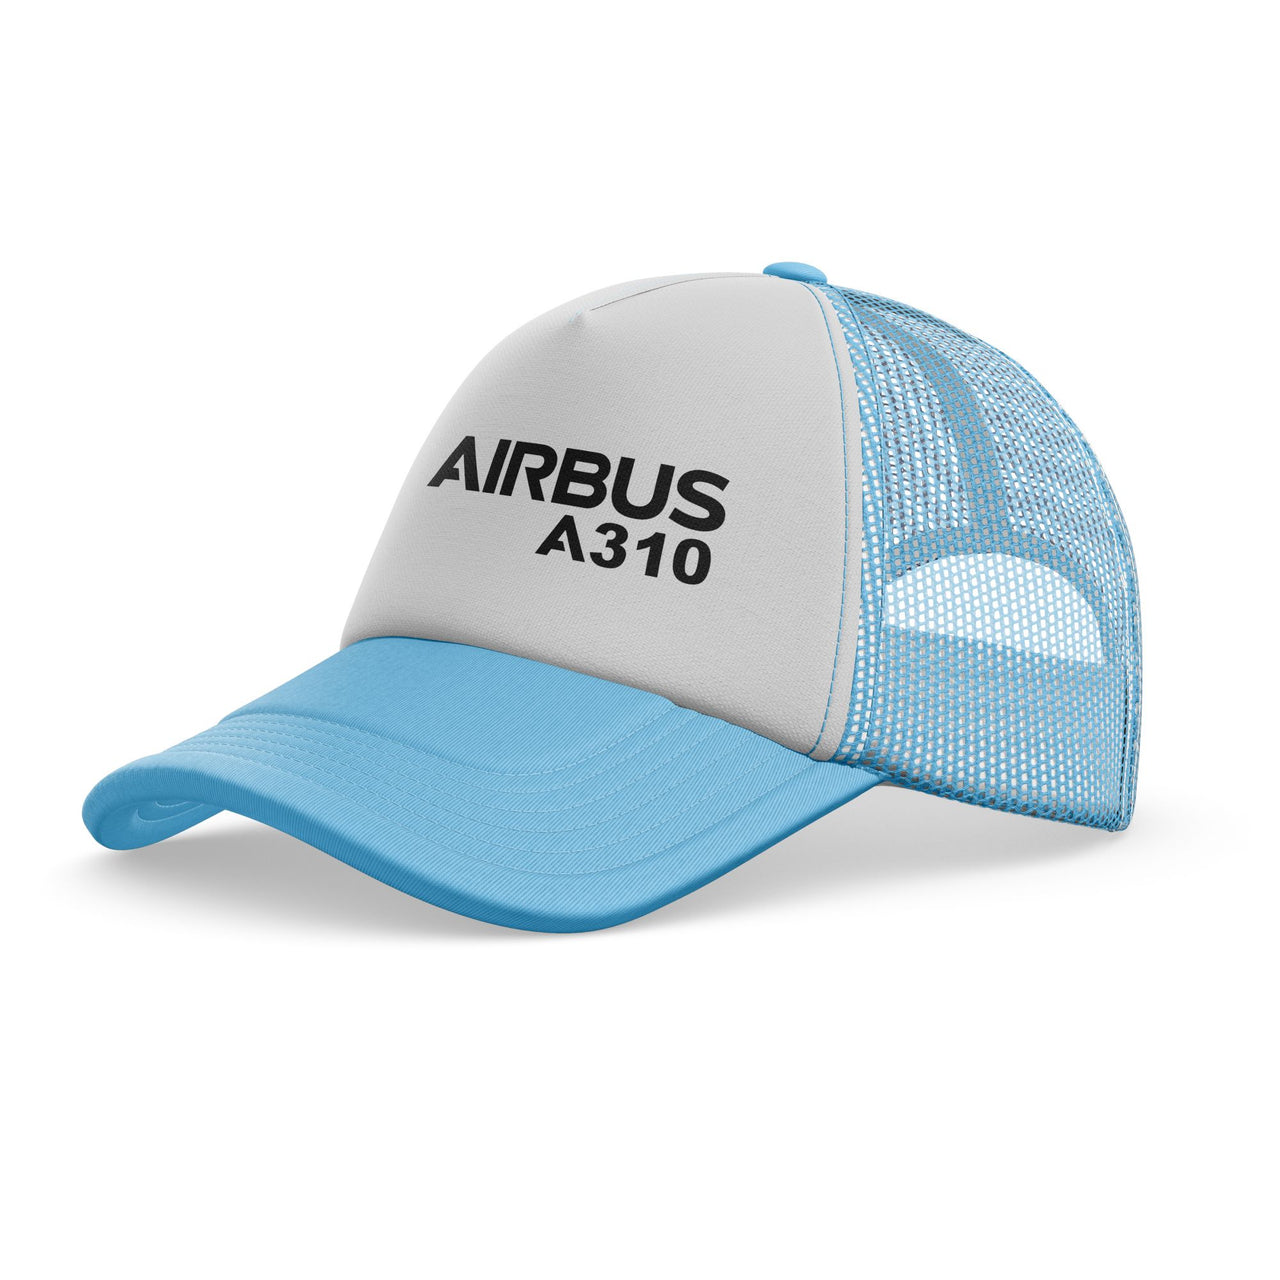 Airbus A310 & Text Designed Trucker Caps & Hats